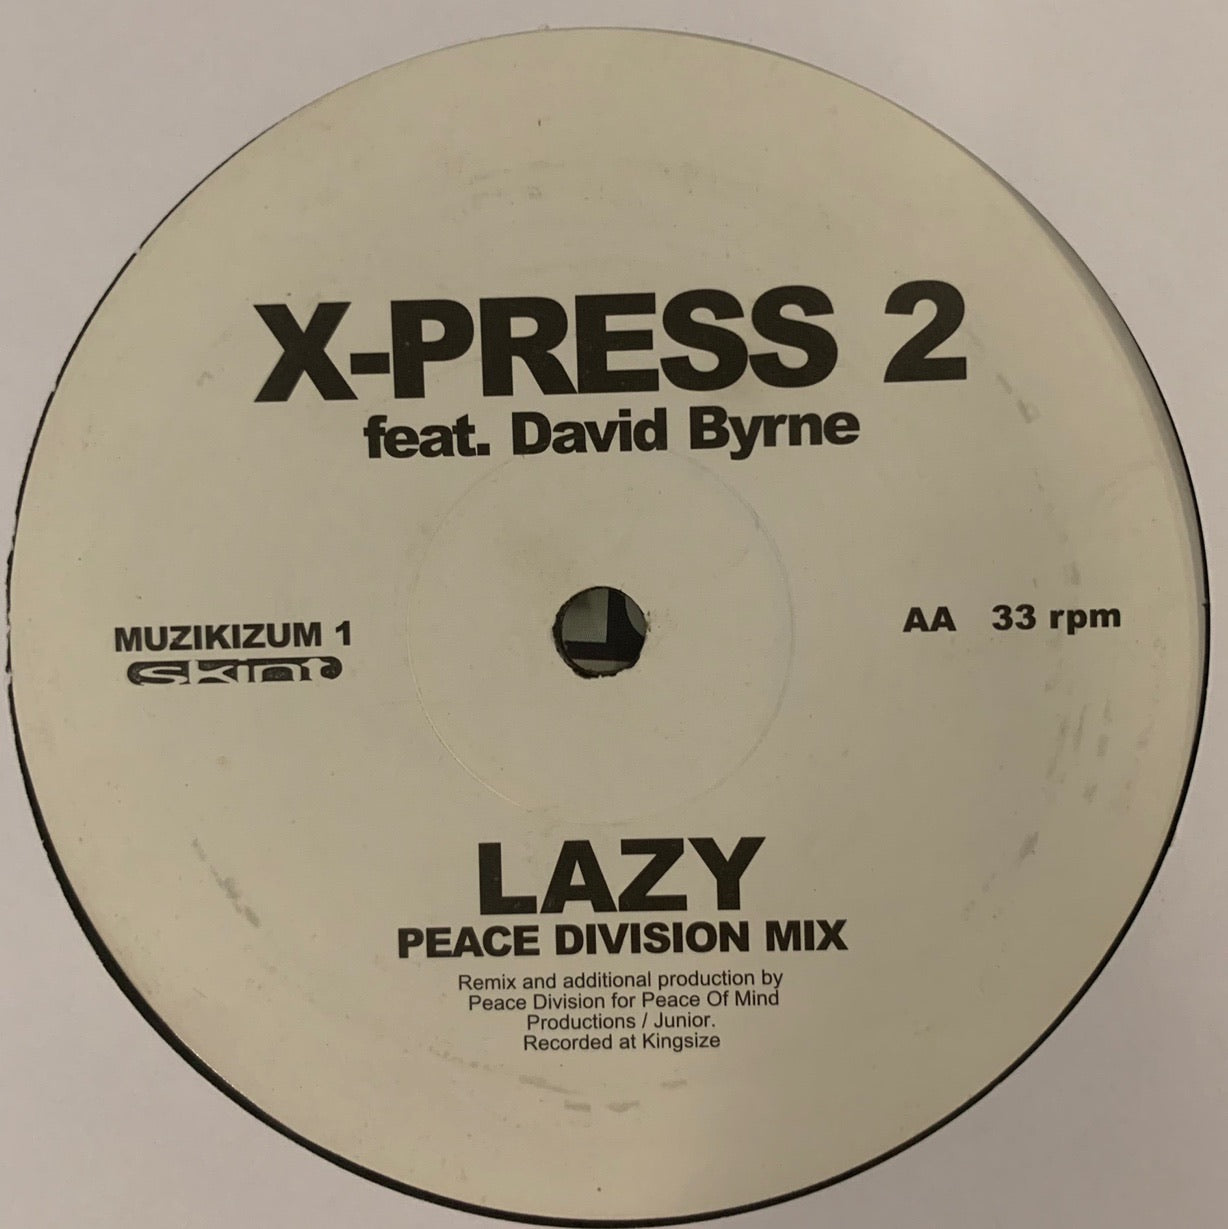 X-Press 2 Feat David Byrne “Lazy” 12inch Vinyl